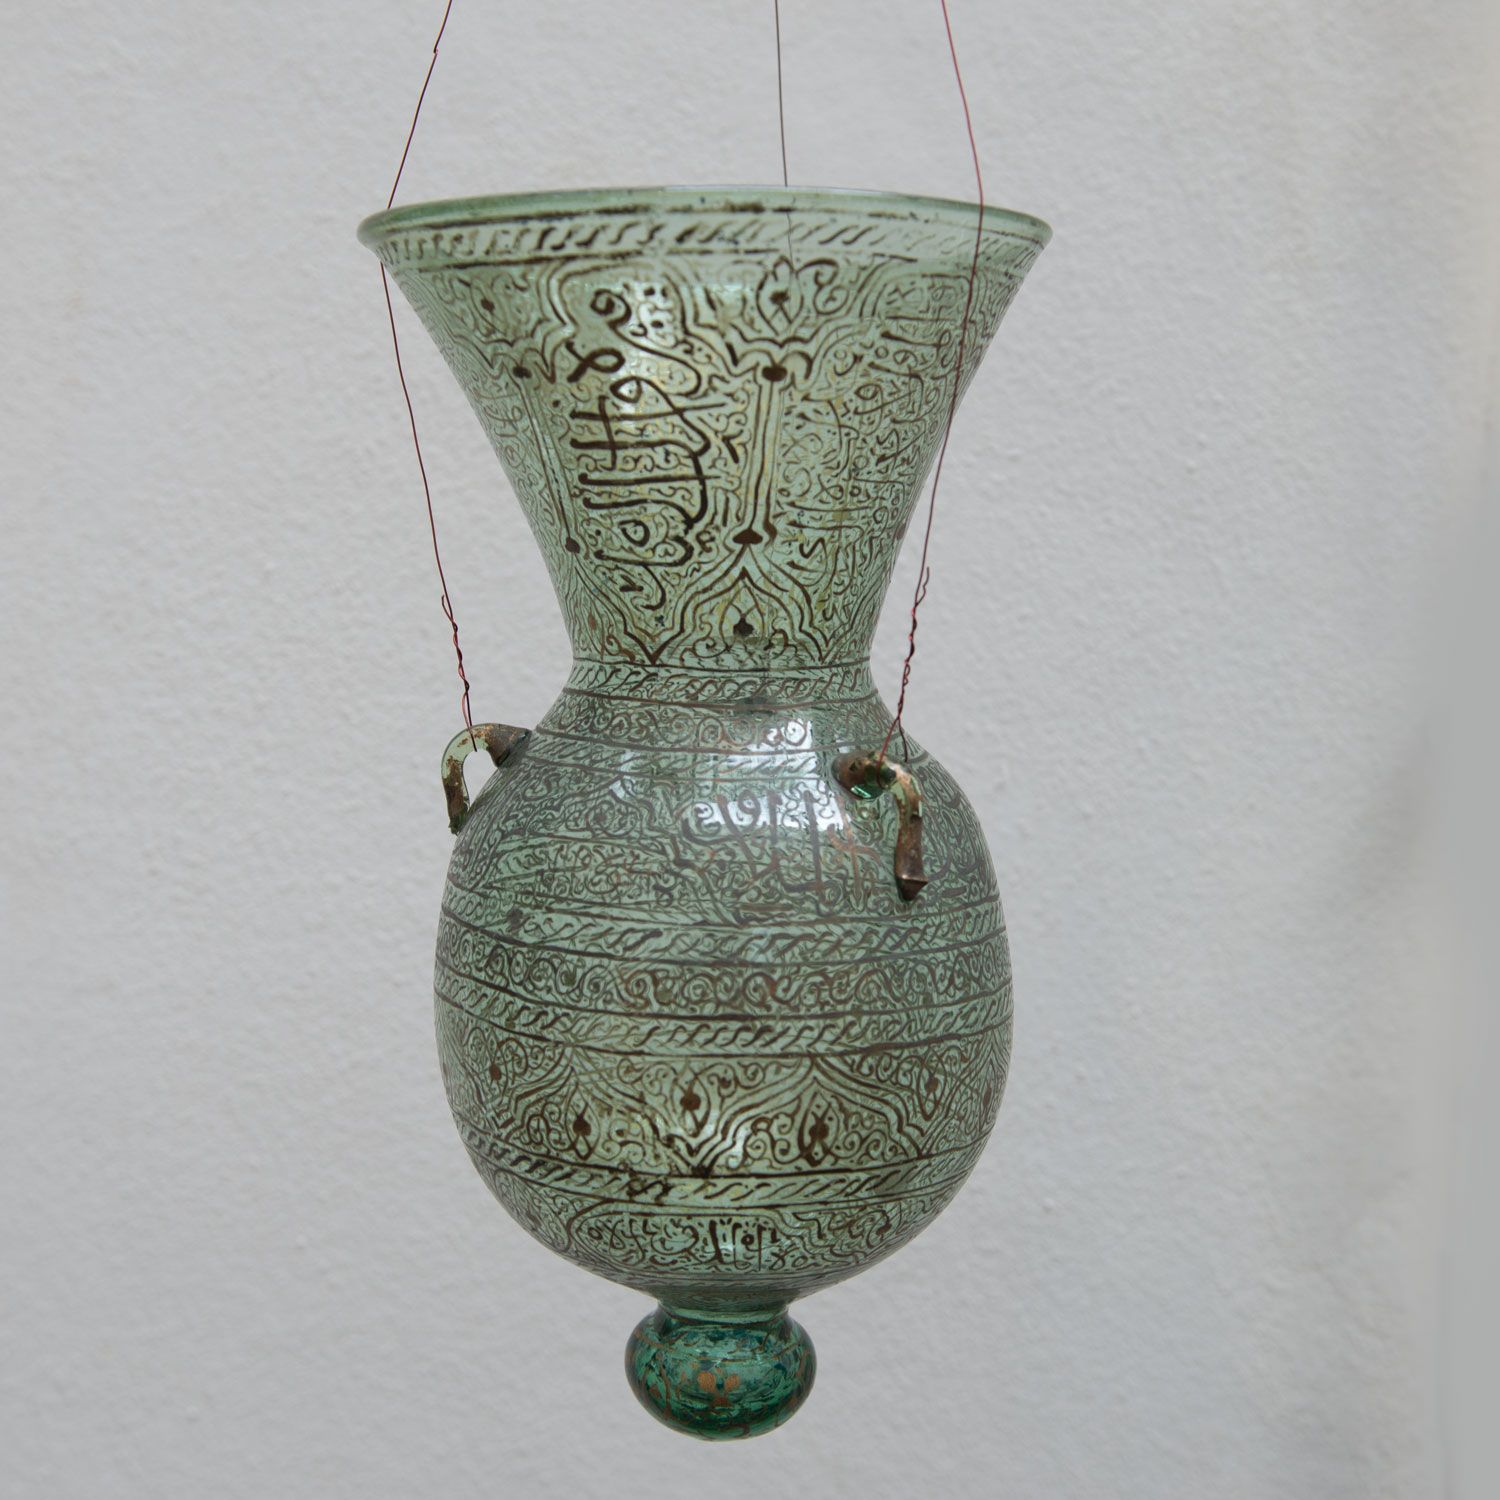 Patricular Mosque Lamp.. Lampe de mosquée patriculaire, ronde, ovale et zylindri&hellip;